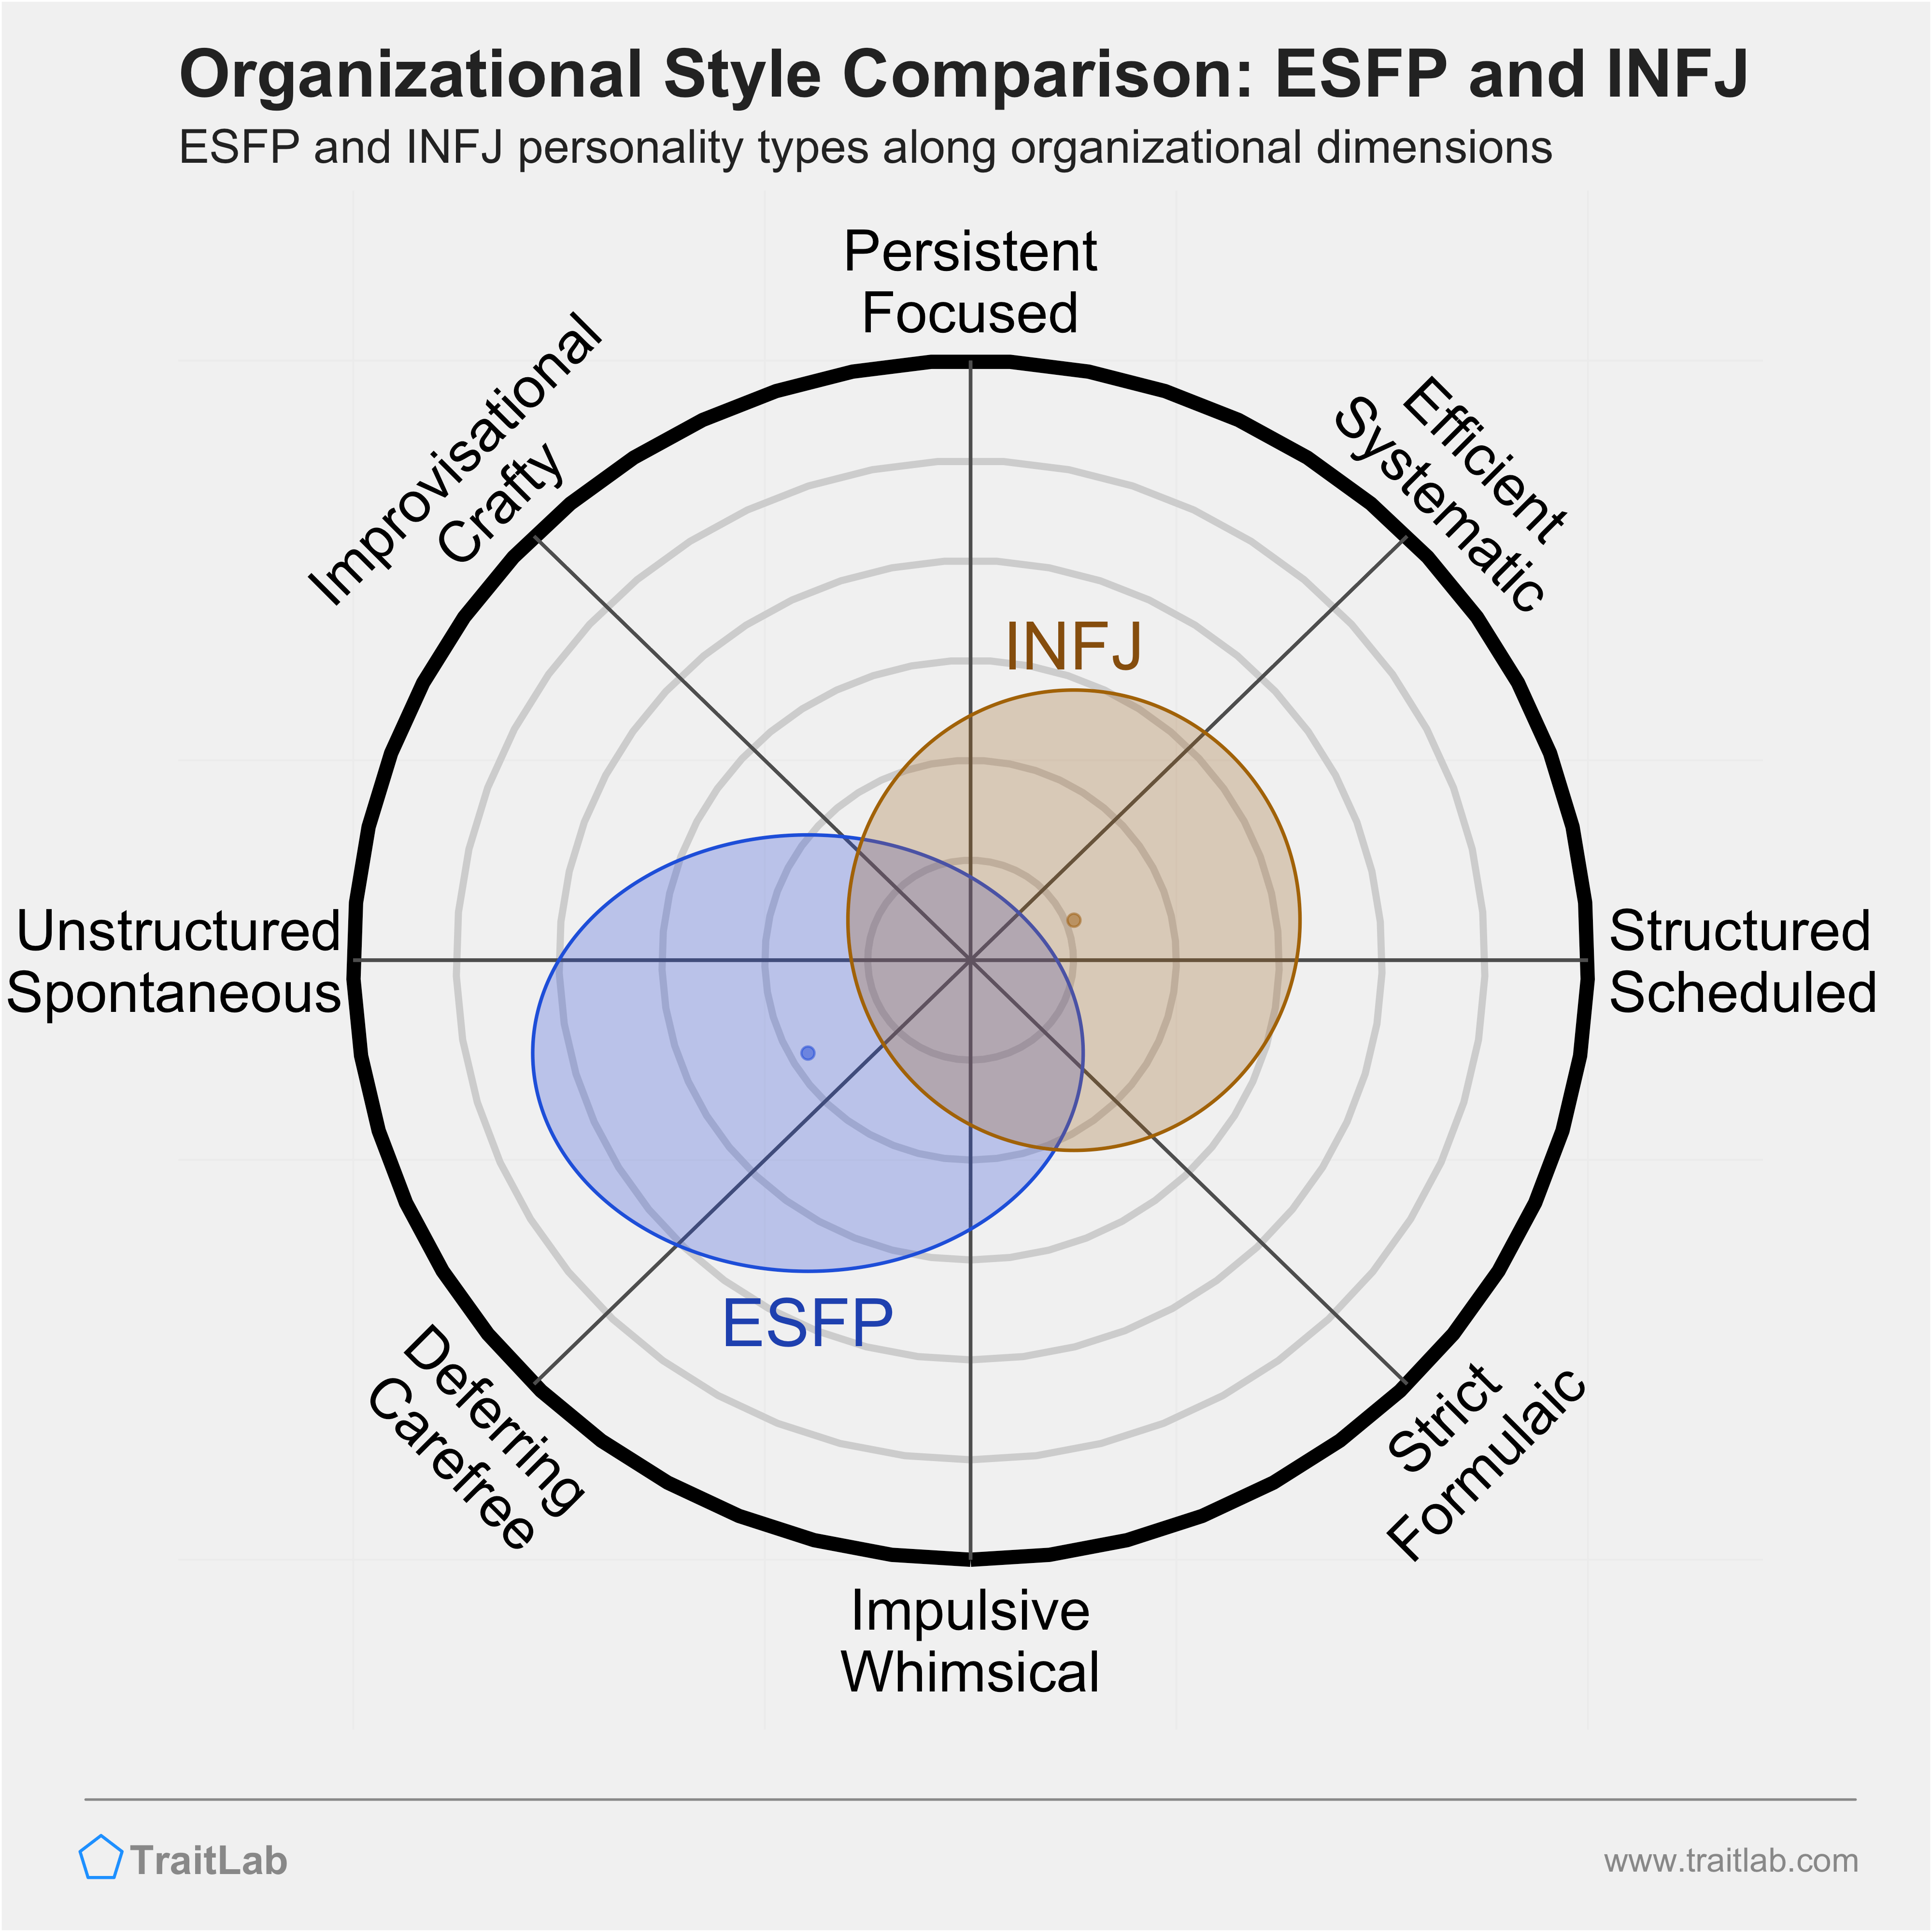 ESFP and INFJ comparison across organizational dimensions